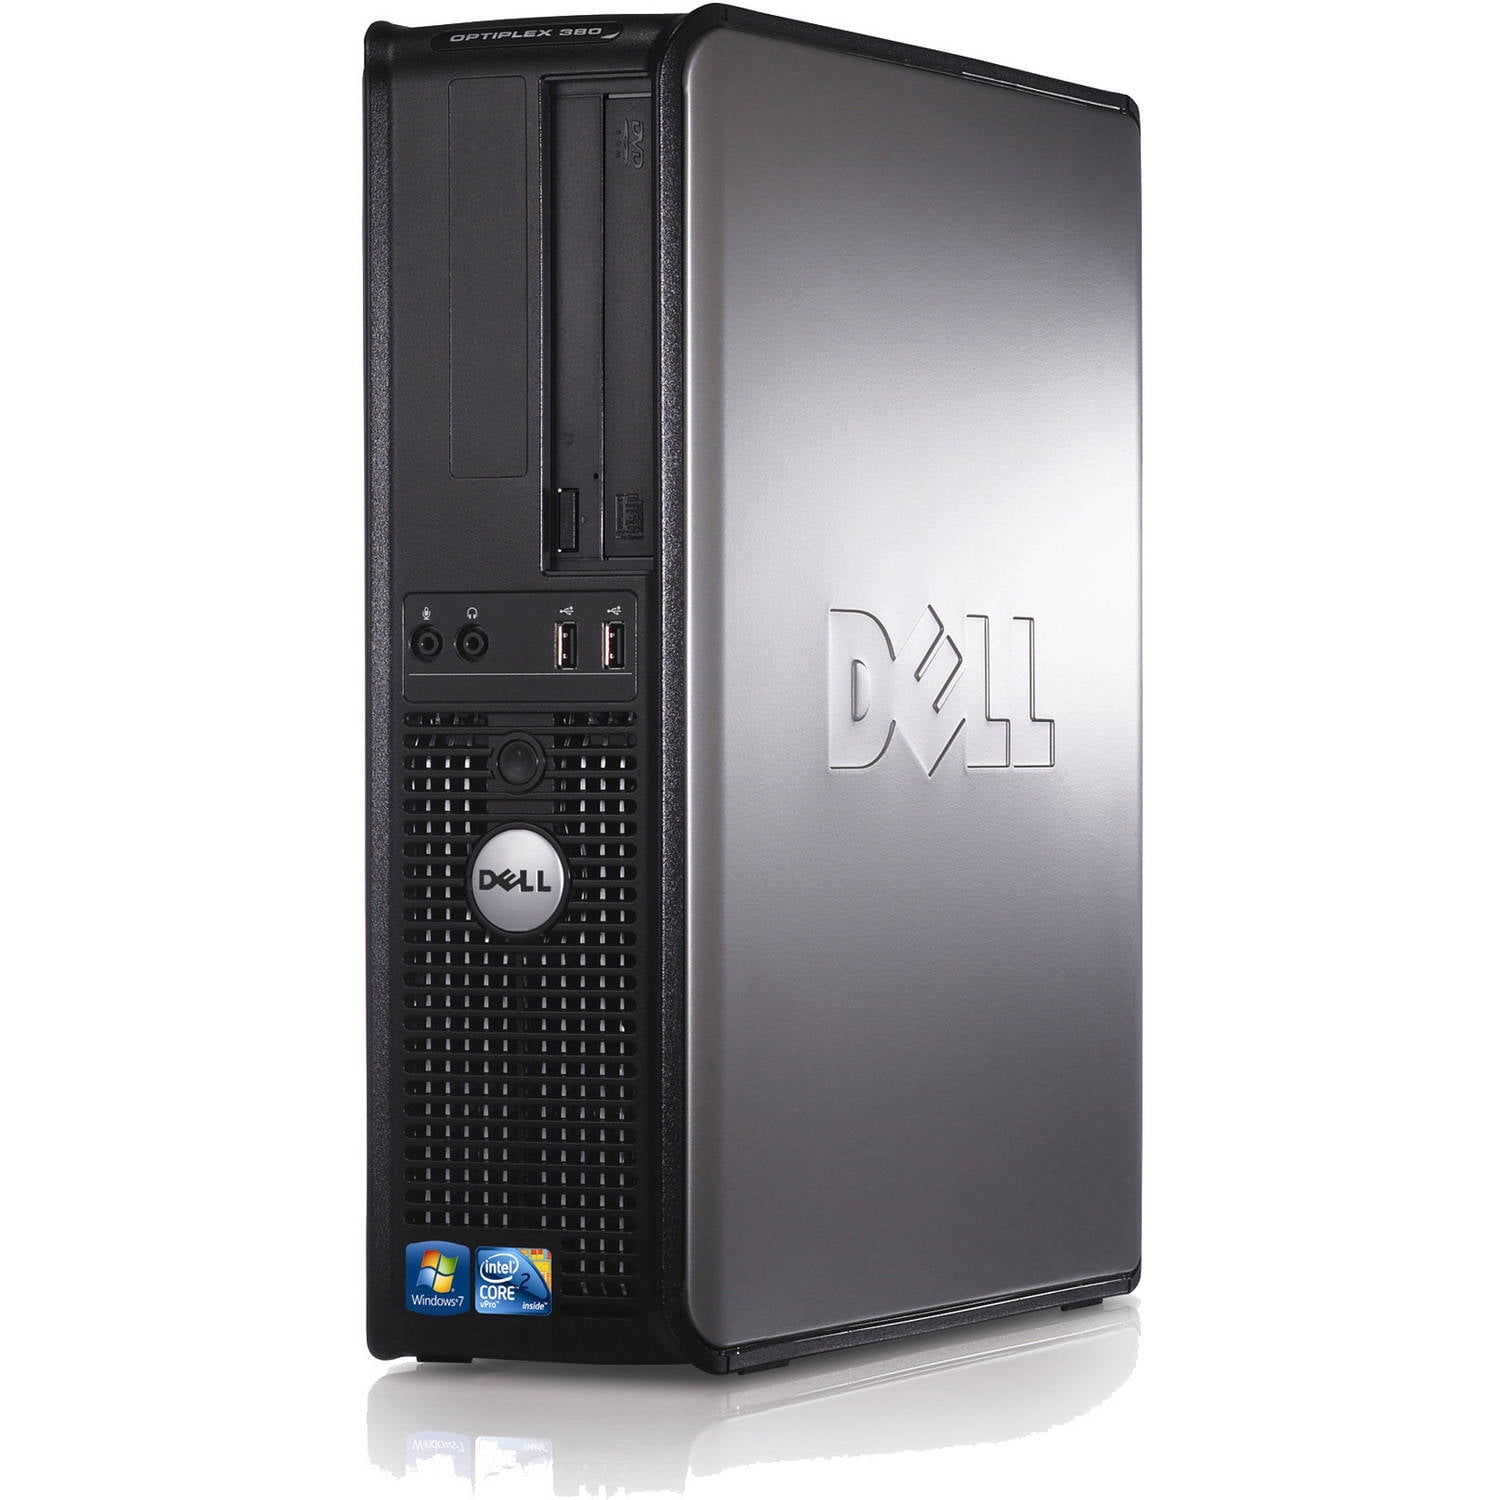 DELL Optiplex-Dual Core 2gb RAM 160gb HDD Windows 7 Desktop PC Computer Bundle 